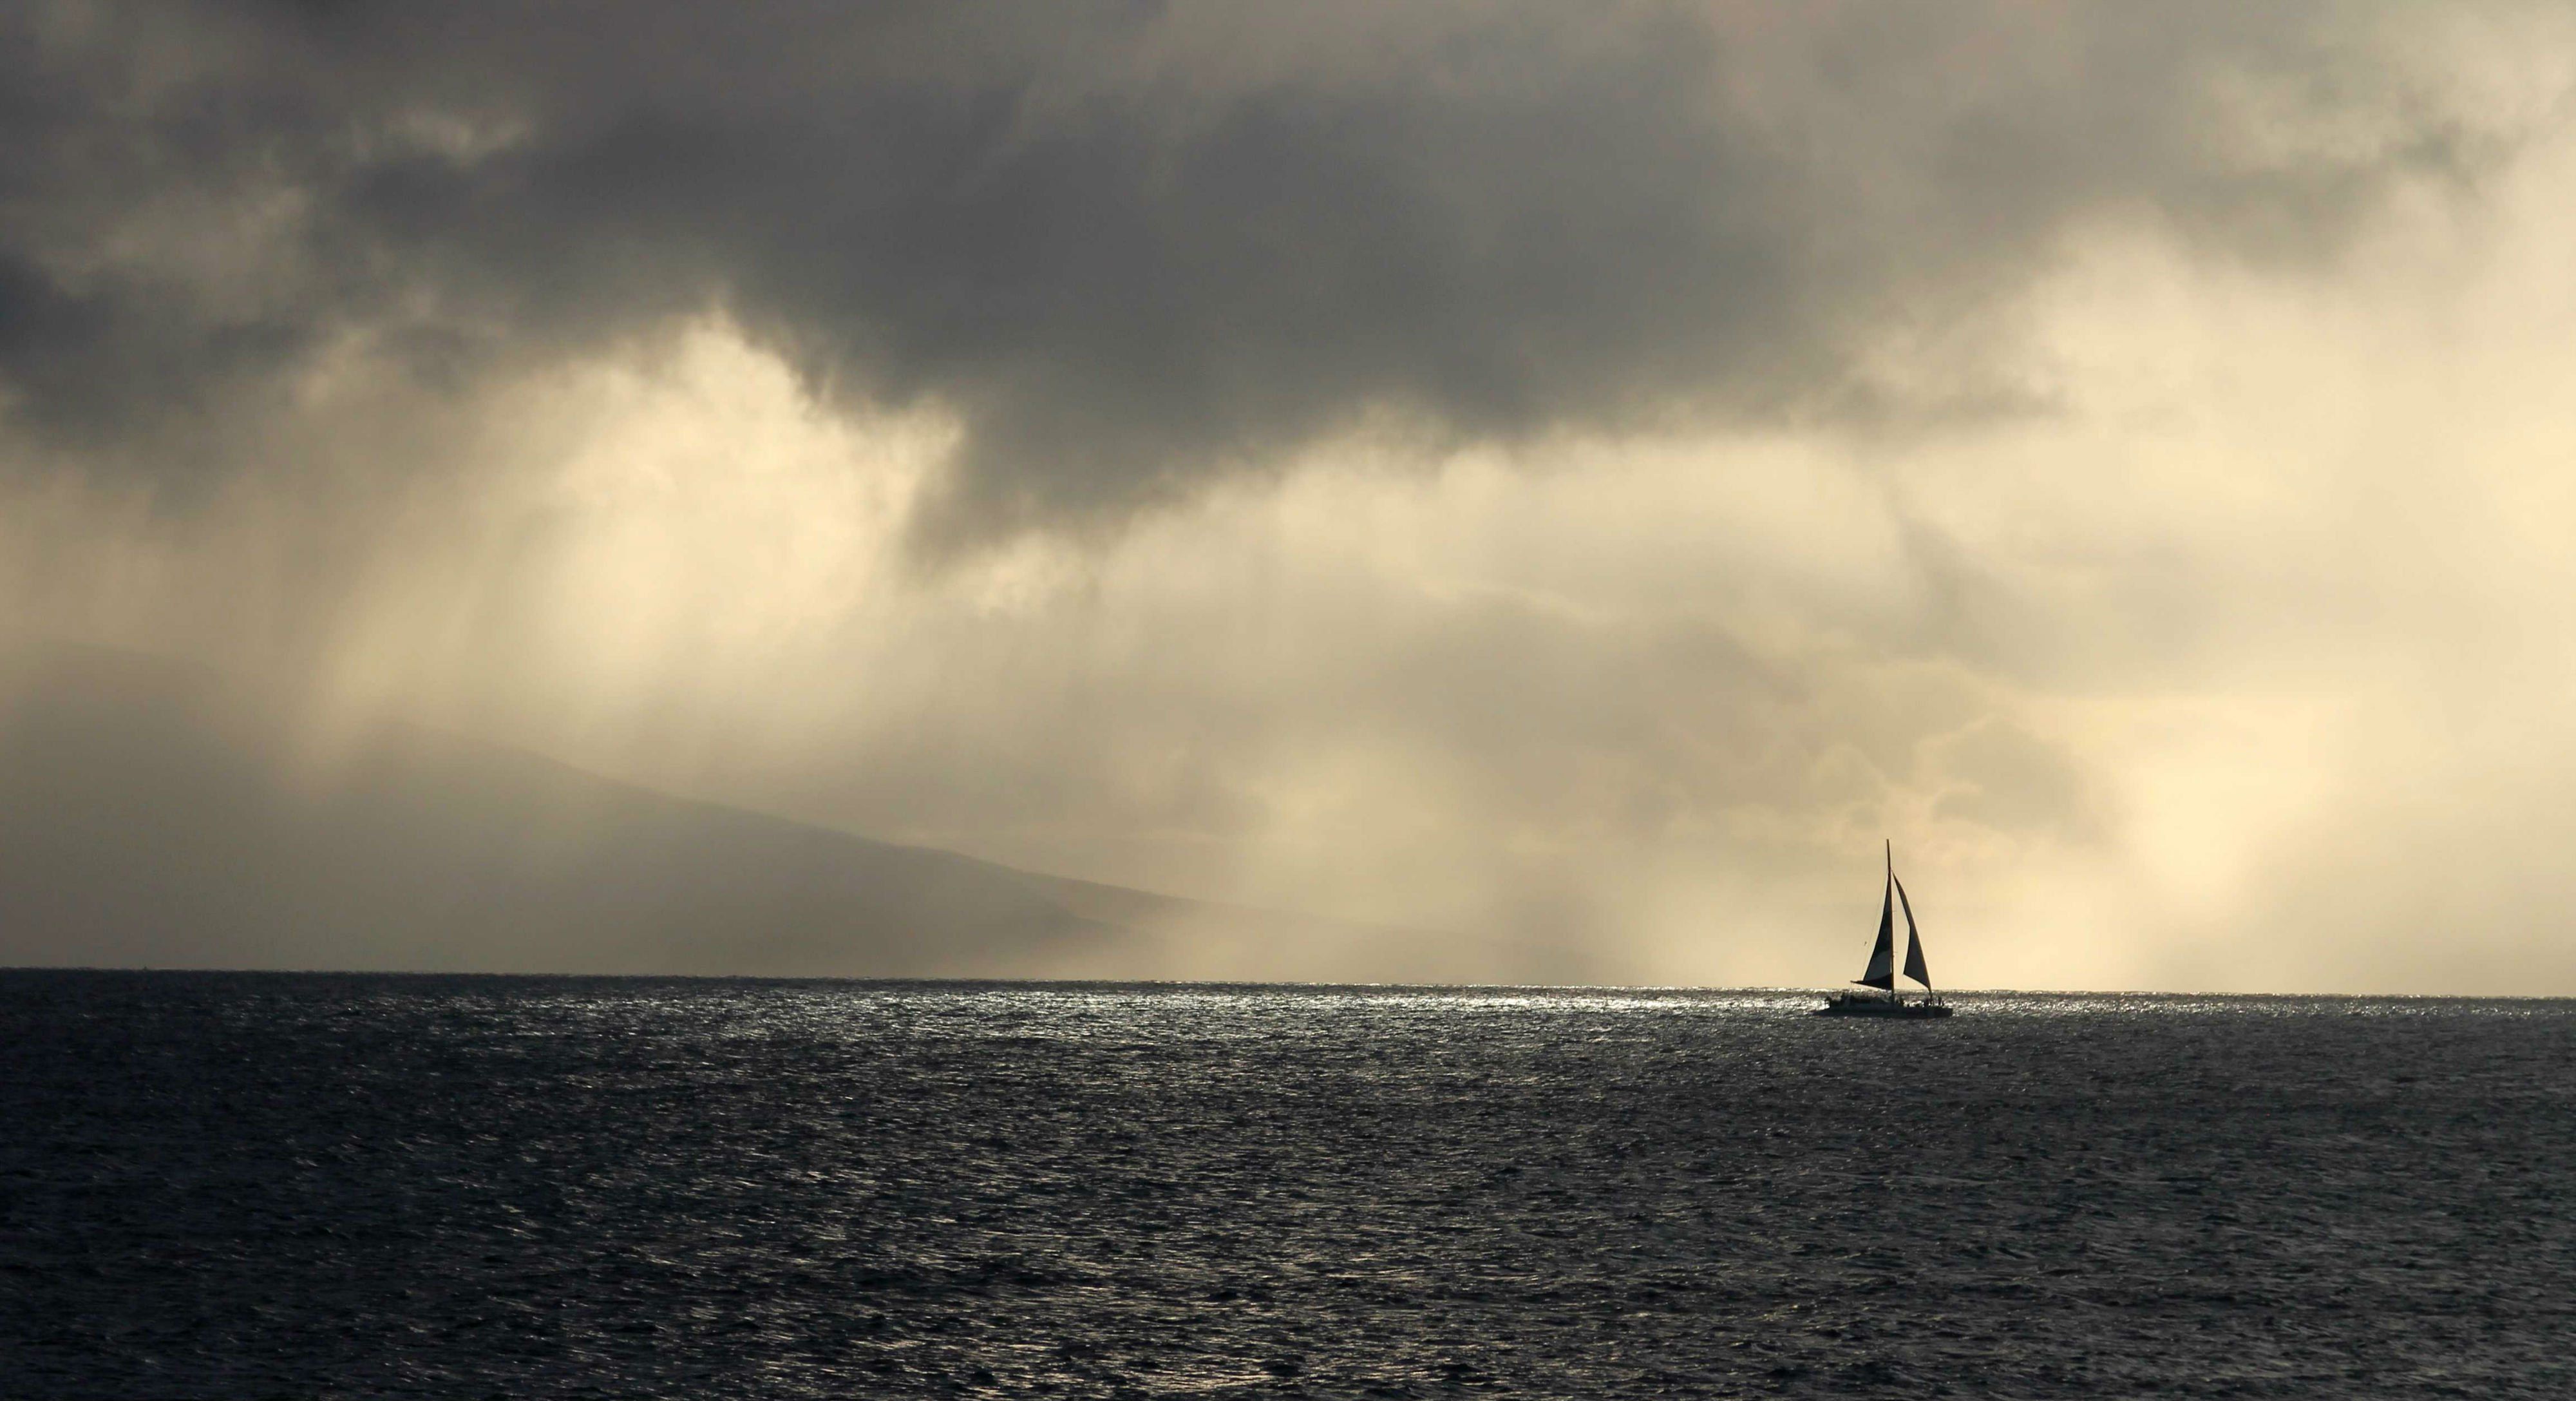 STORM weather rain sky clouds nature sea ocean waves sailing boat